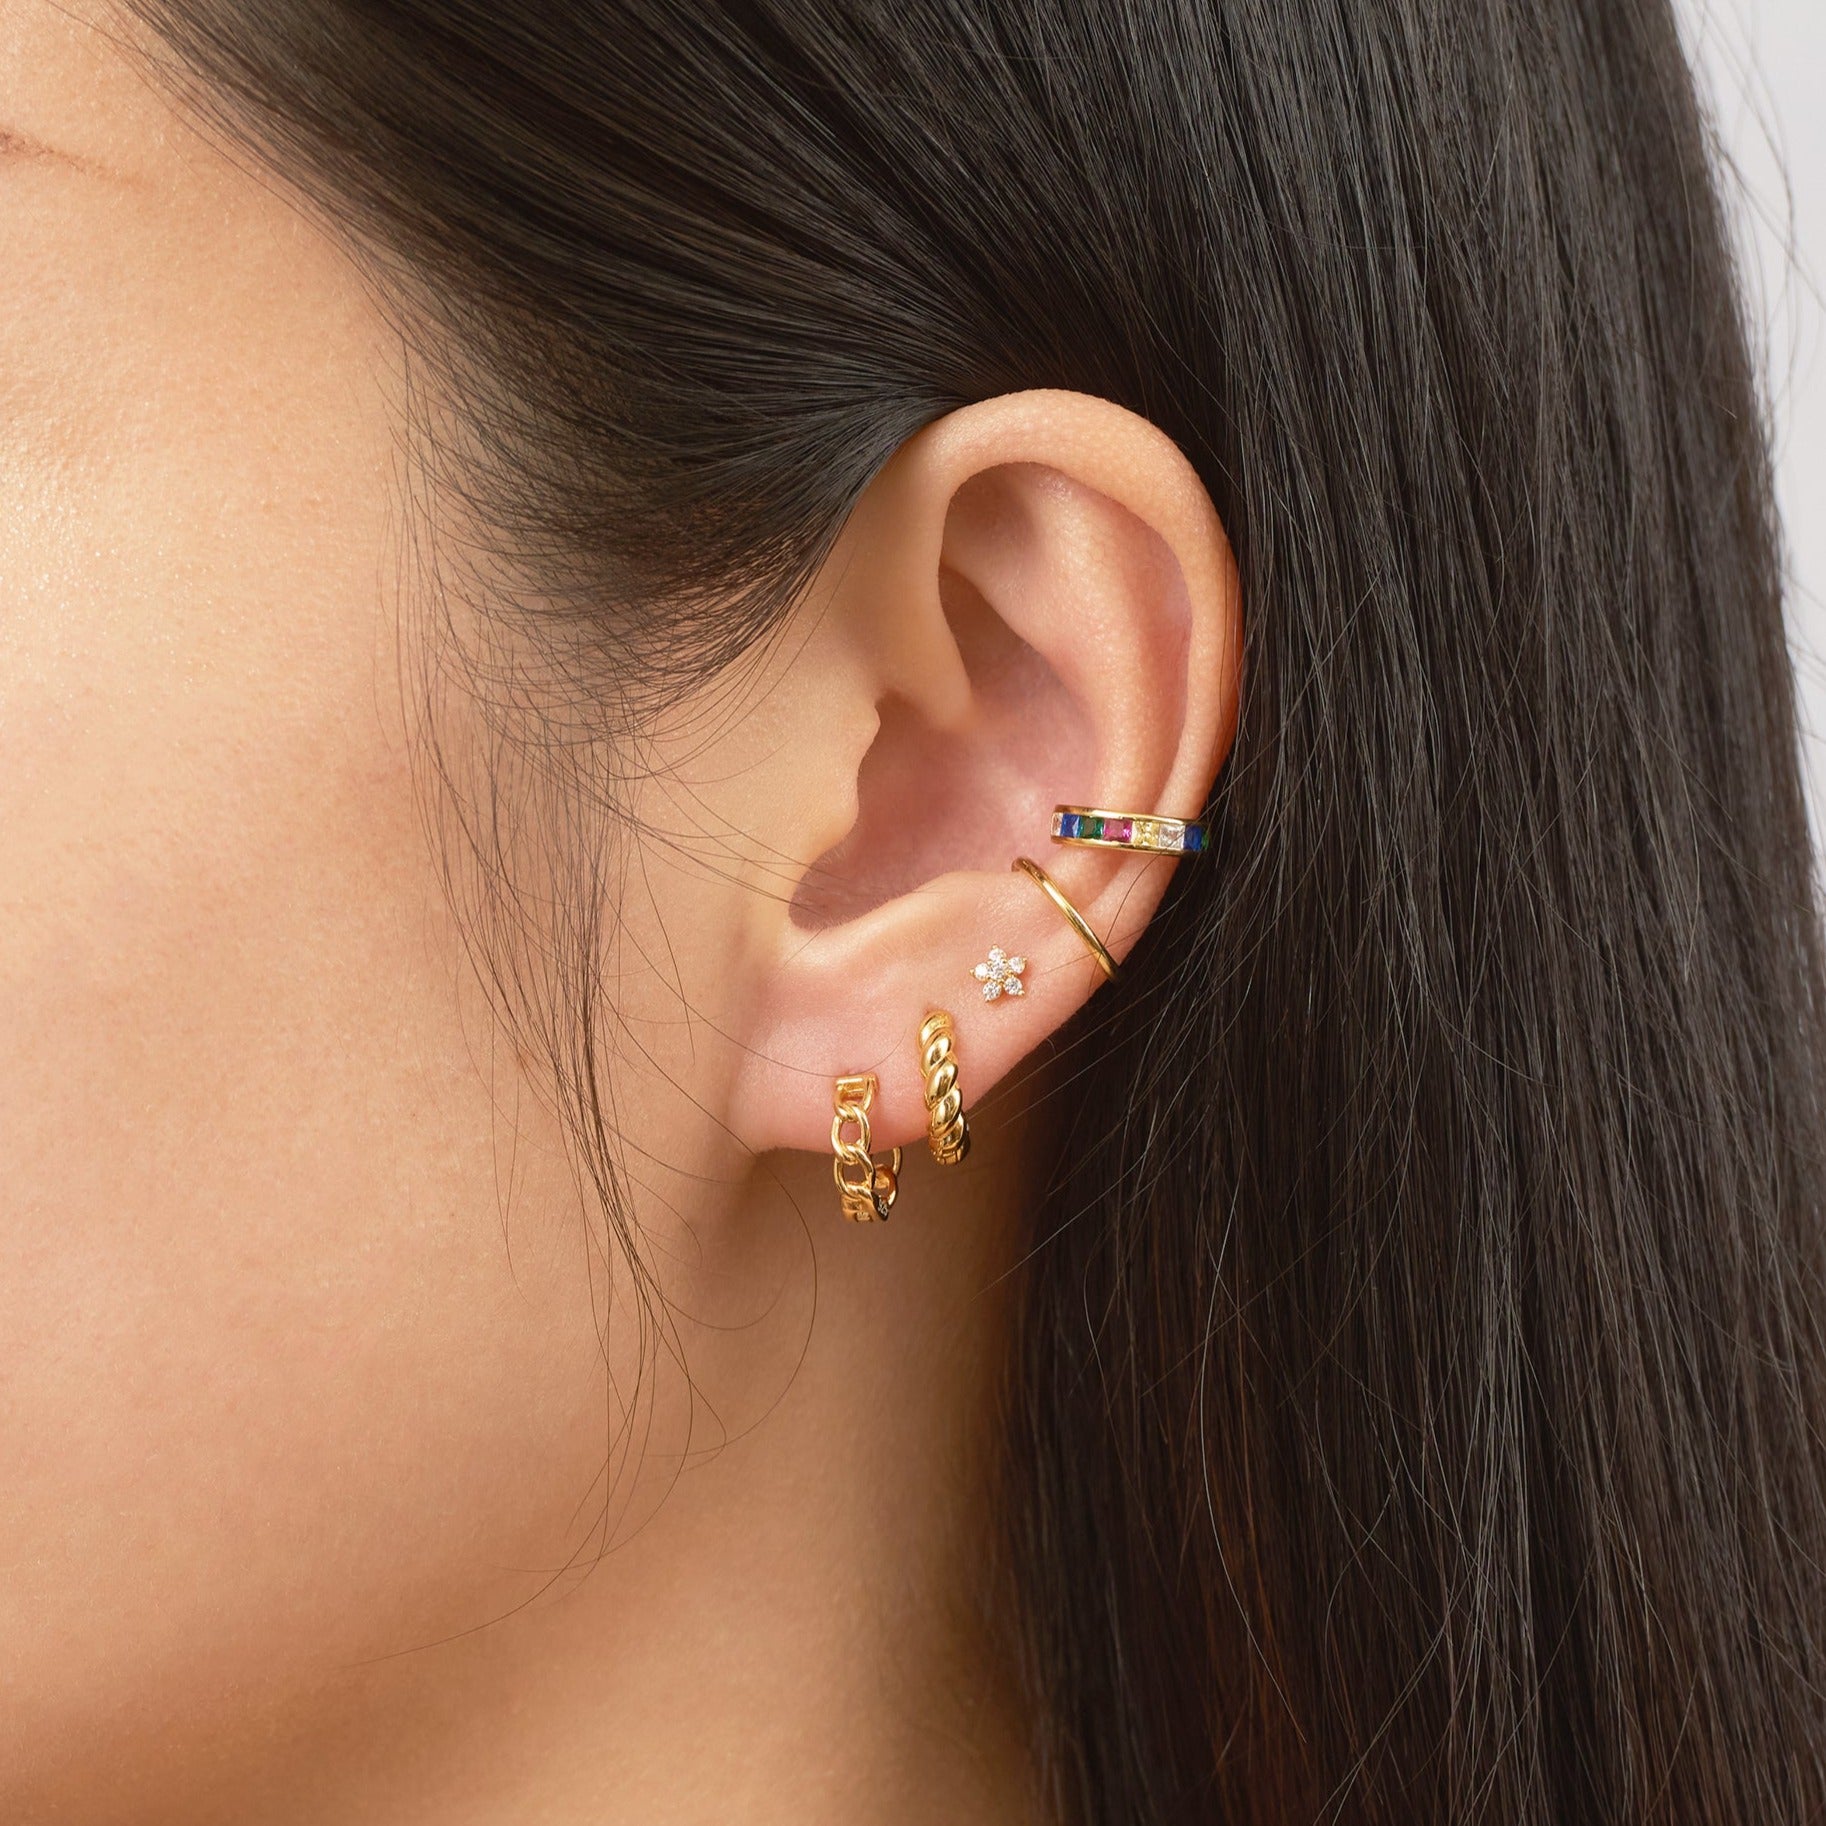 Gold Sleek Secure Cartilage Fake Piercing Cuff Single Plain Ear Cuff by Doviana